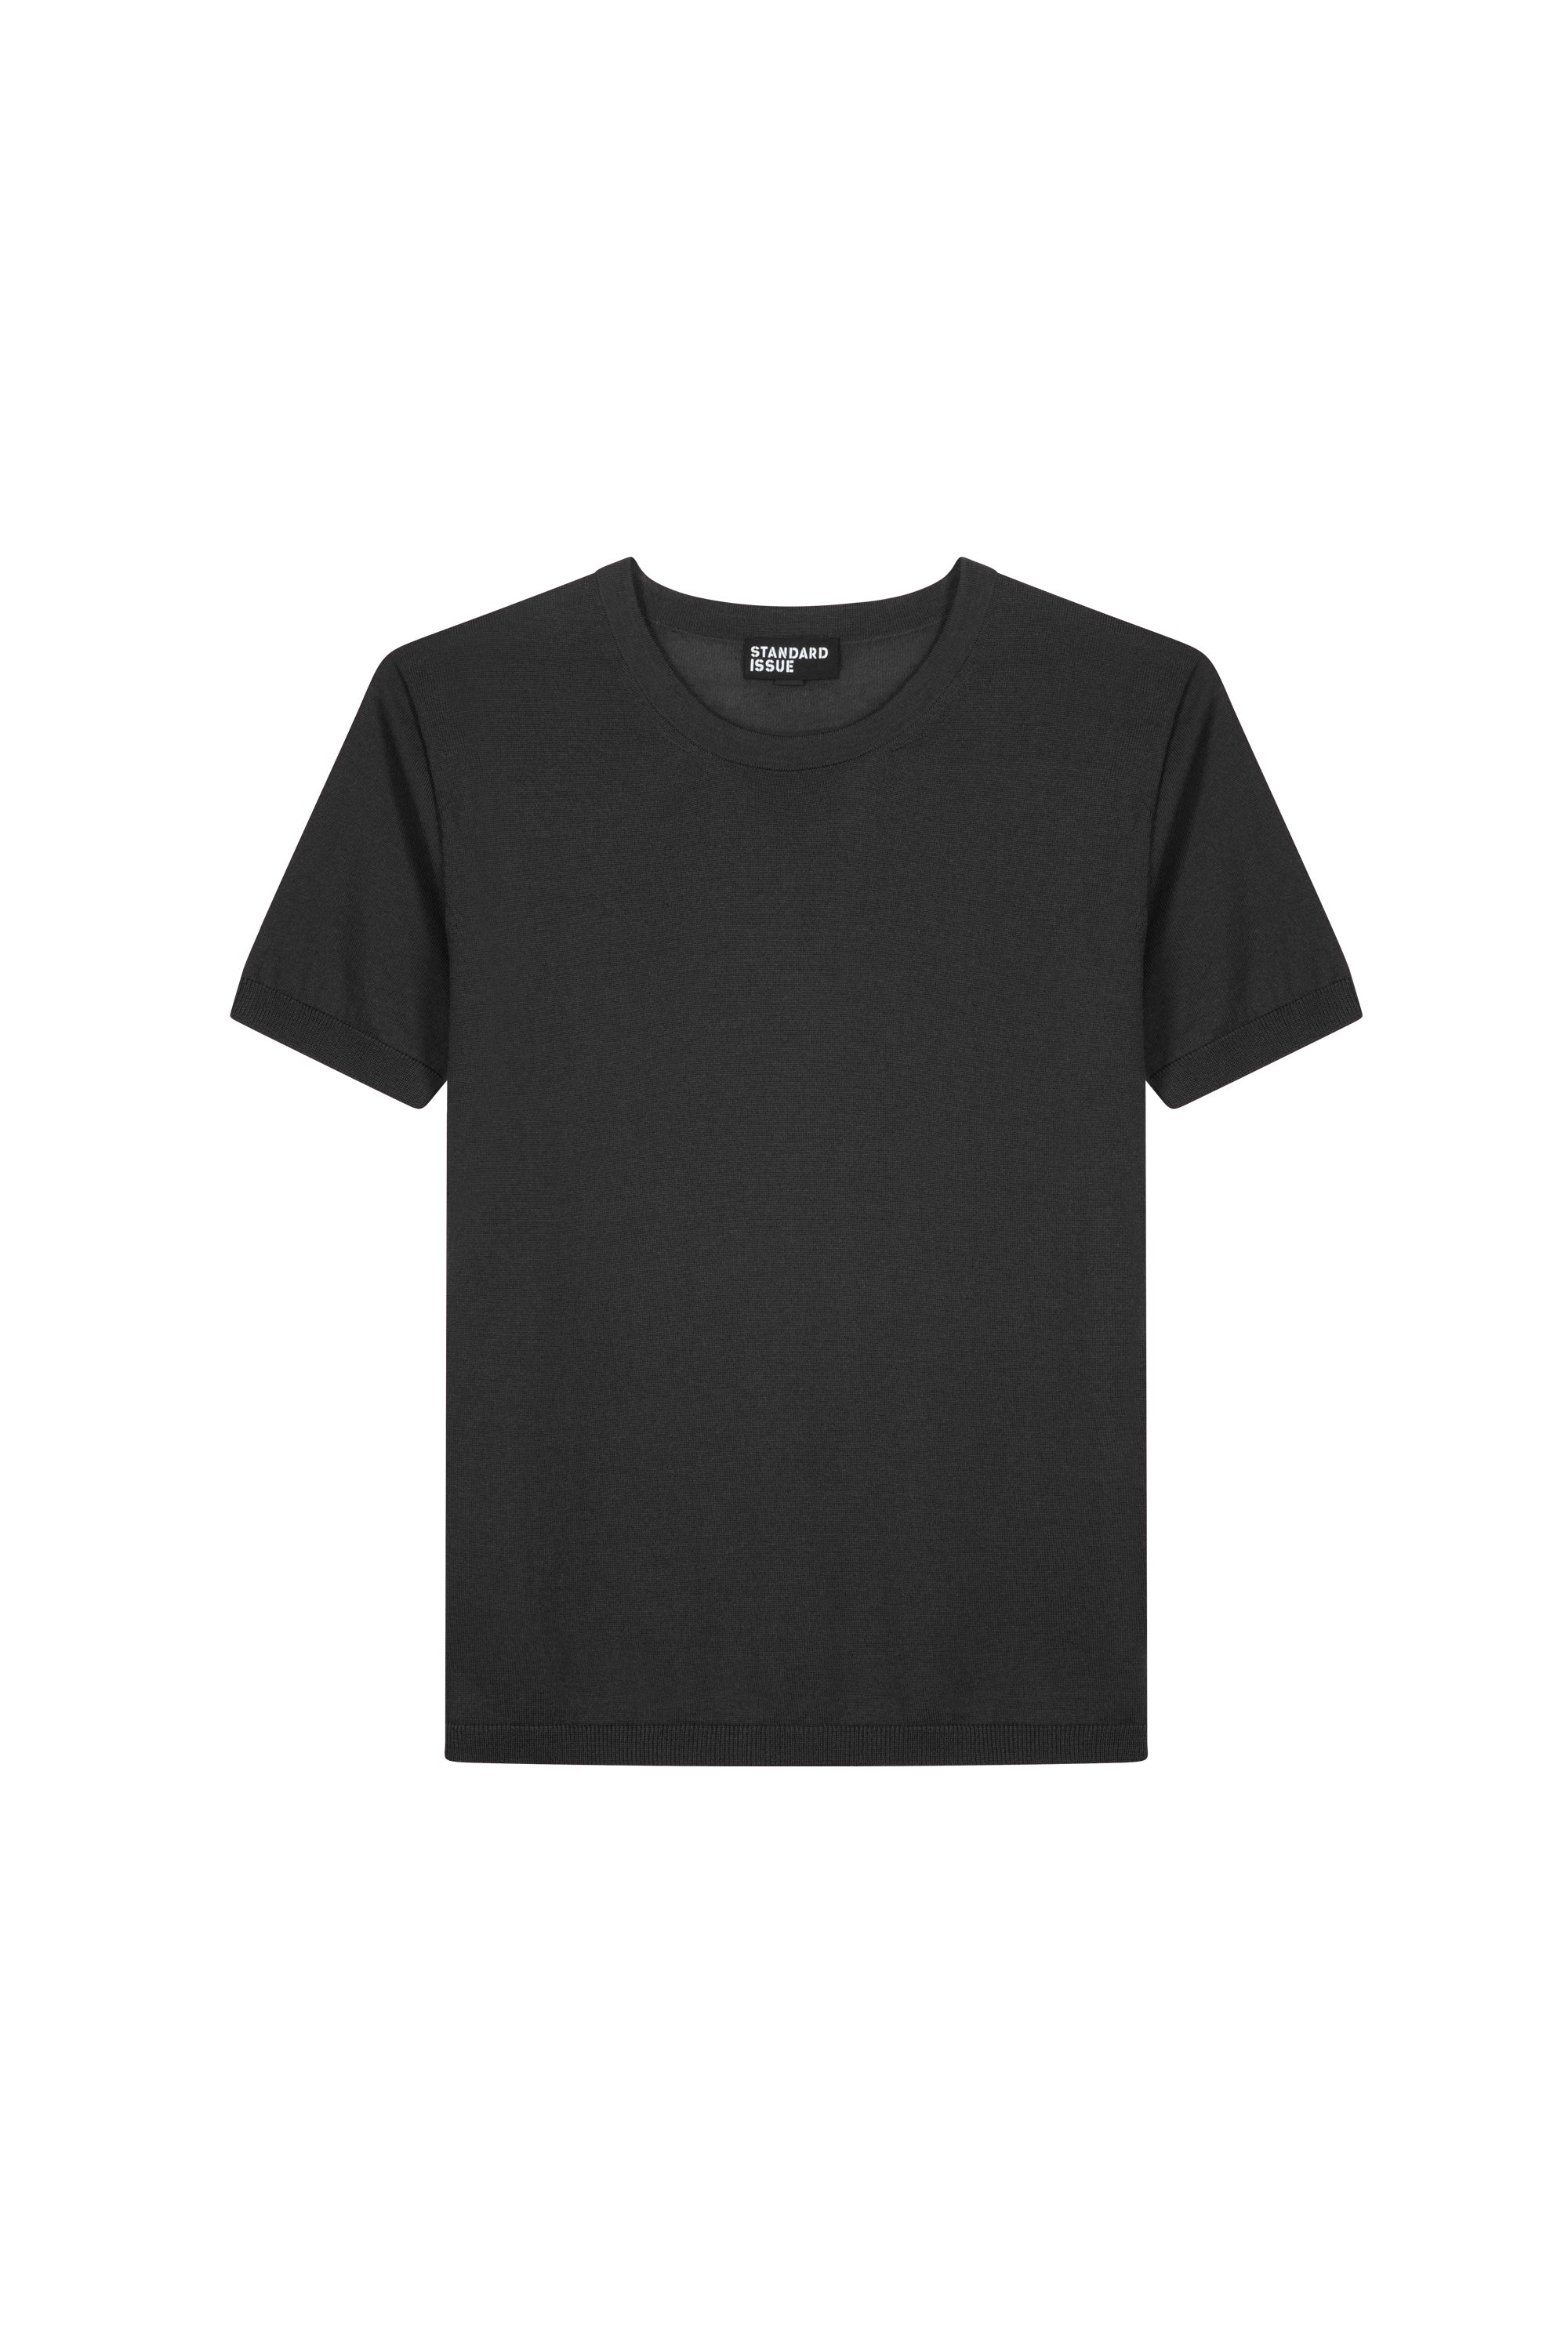 Standard Issue Universal Fit Merino T-Shirt in Black